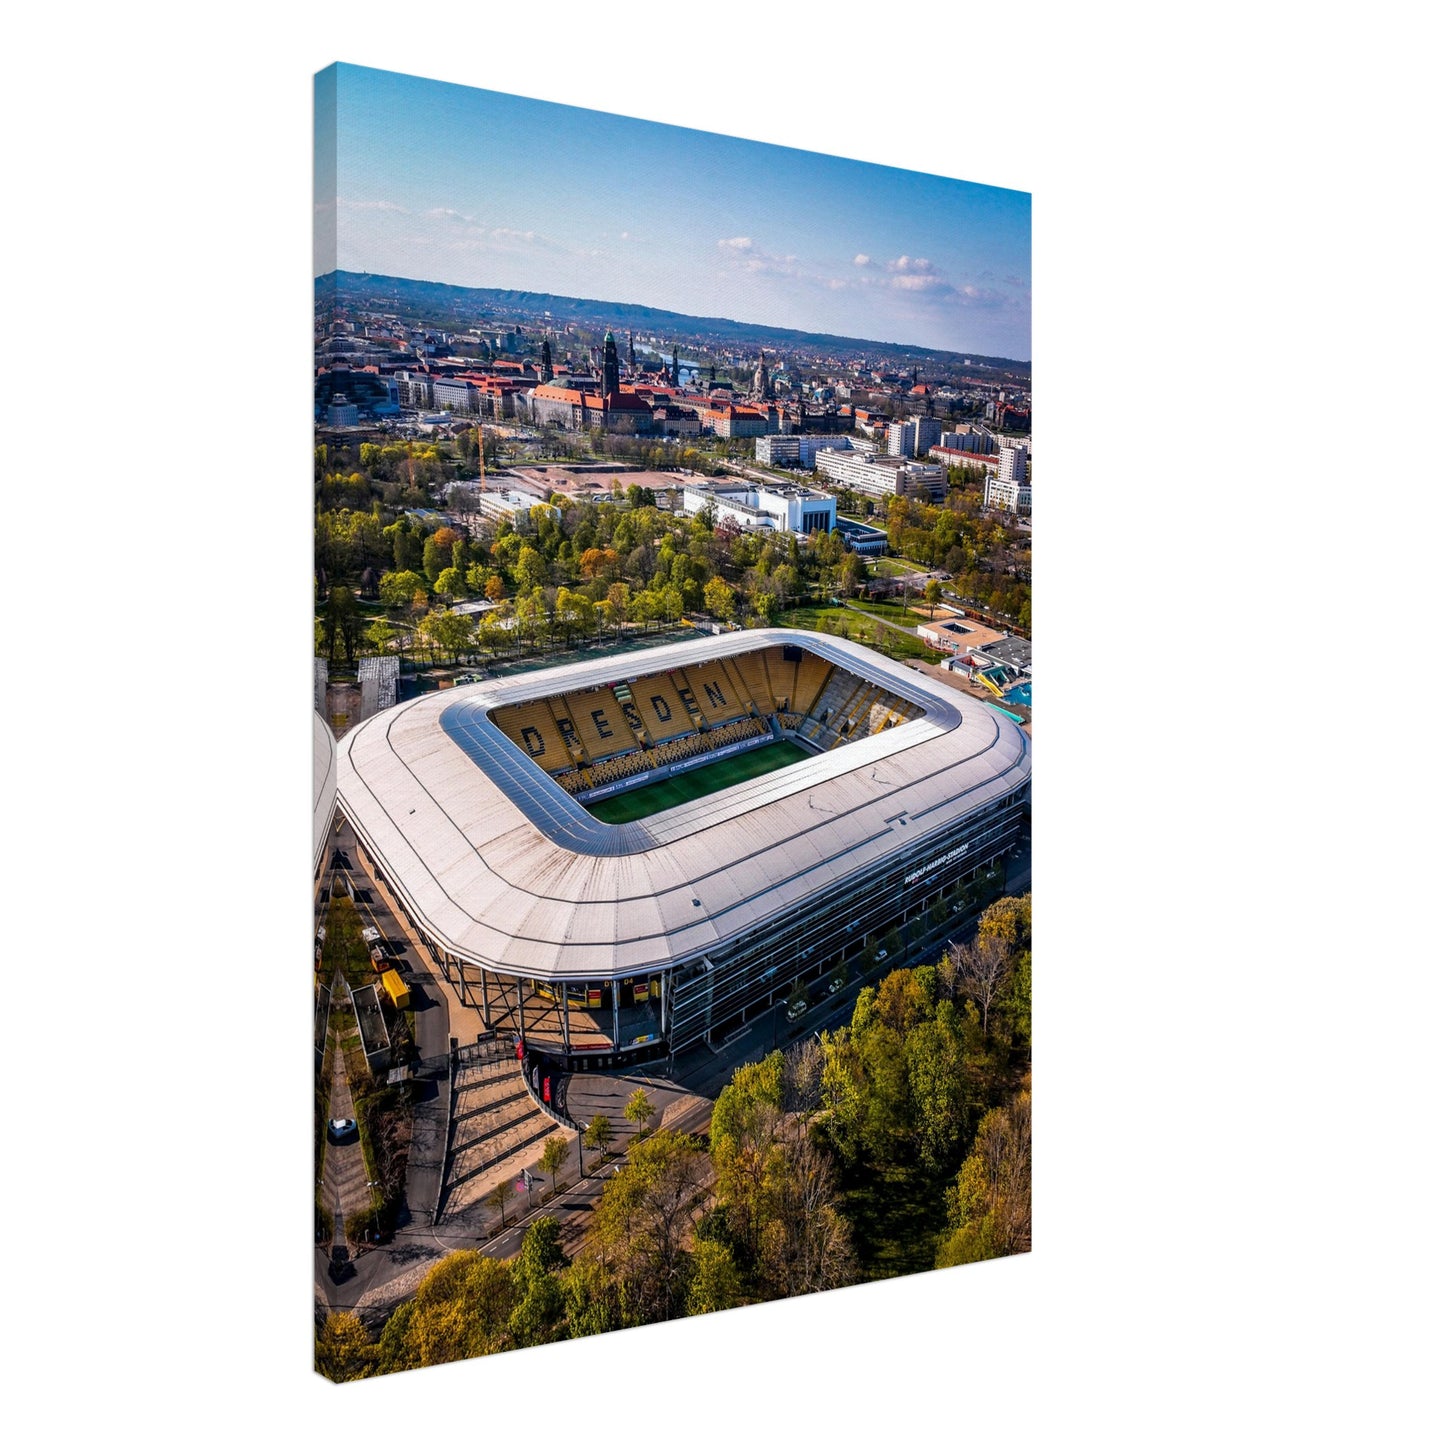 Rudolf Harbig Stadion, Dynamo Dresden Stadium Canvas